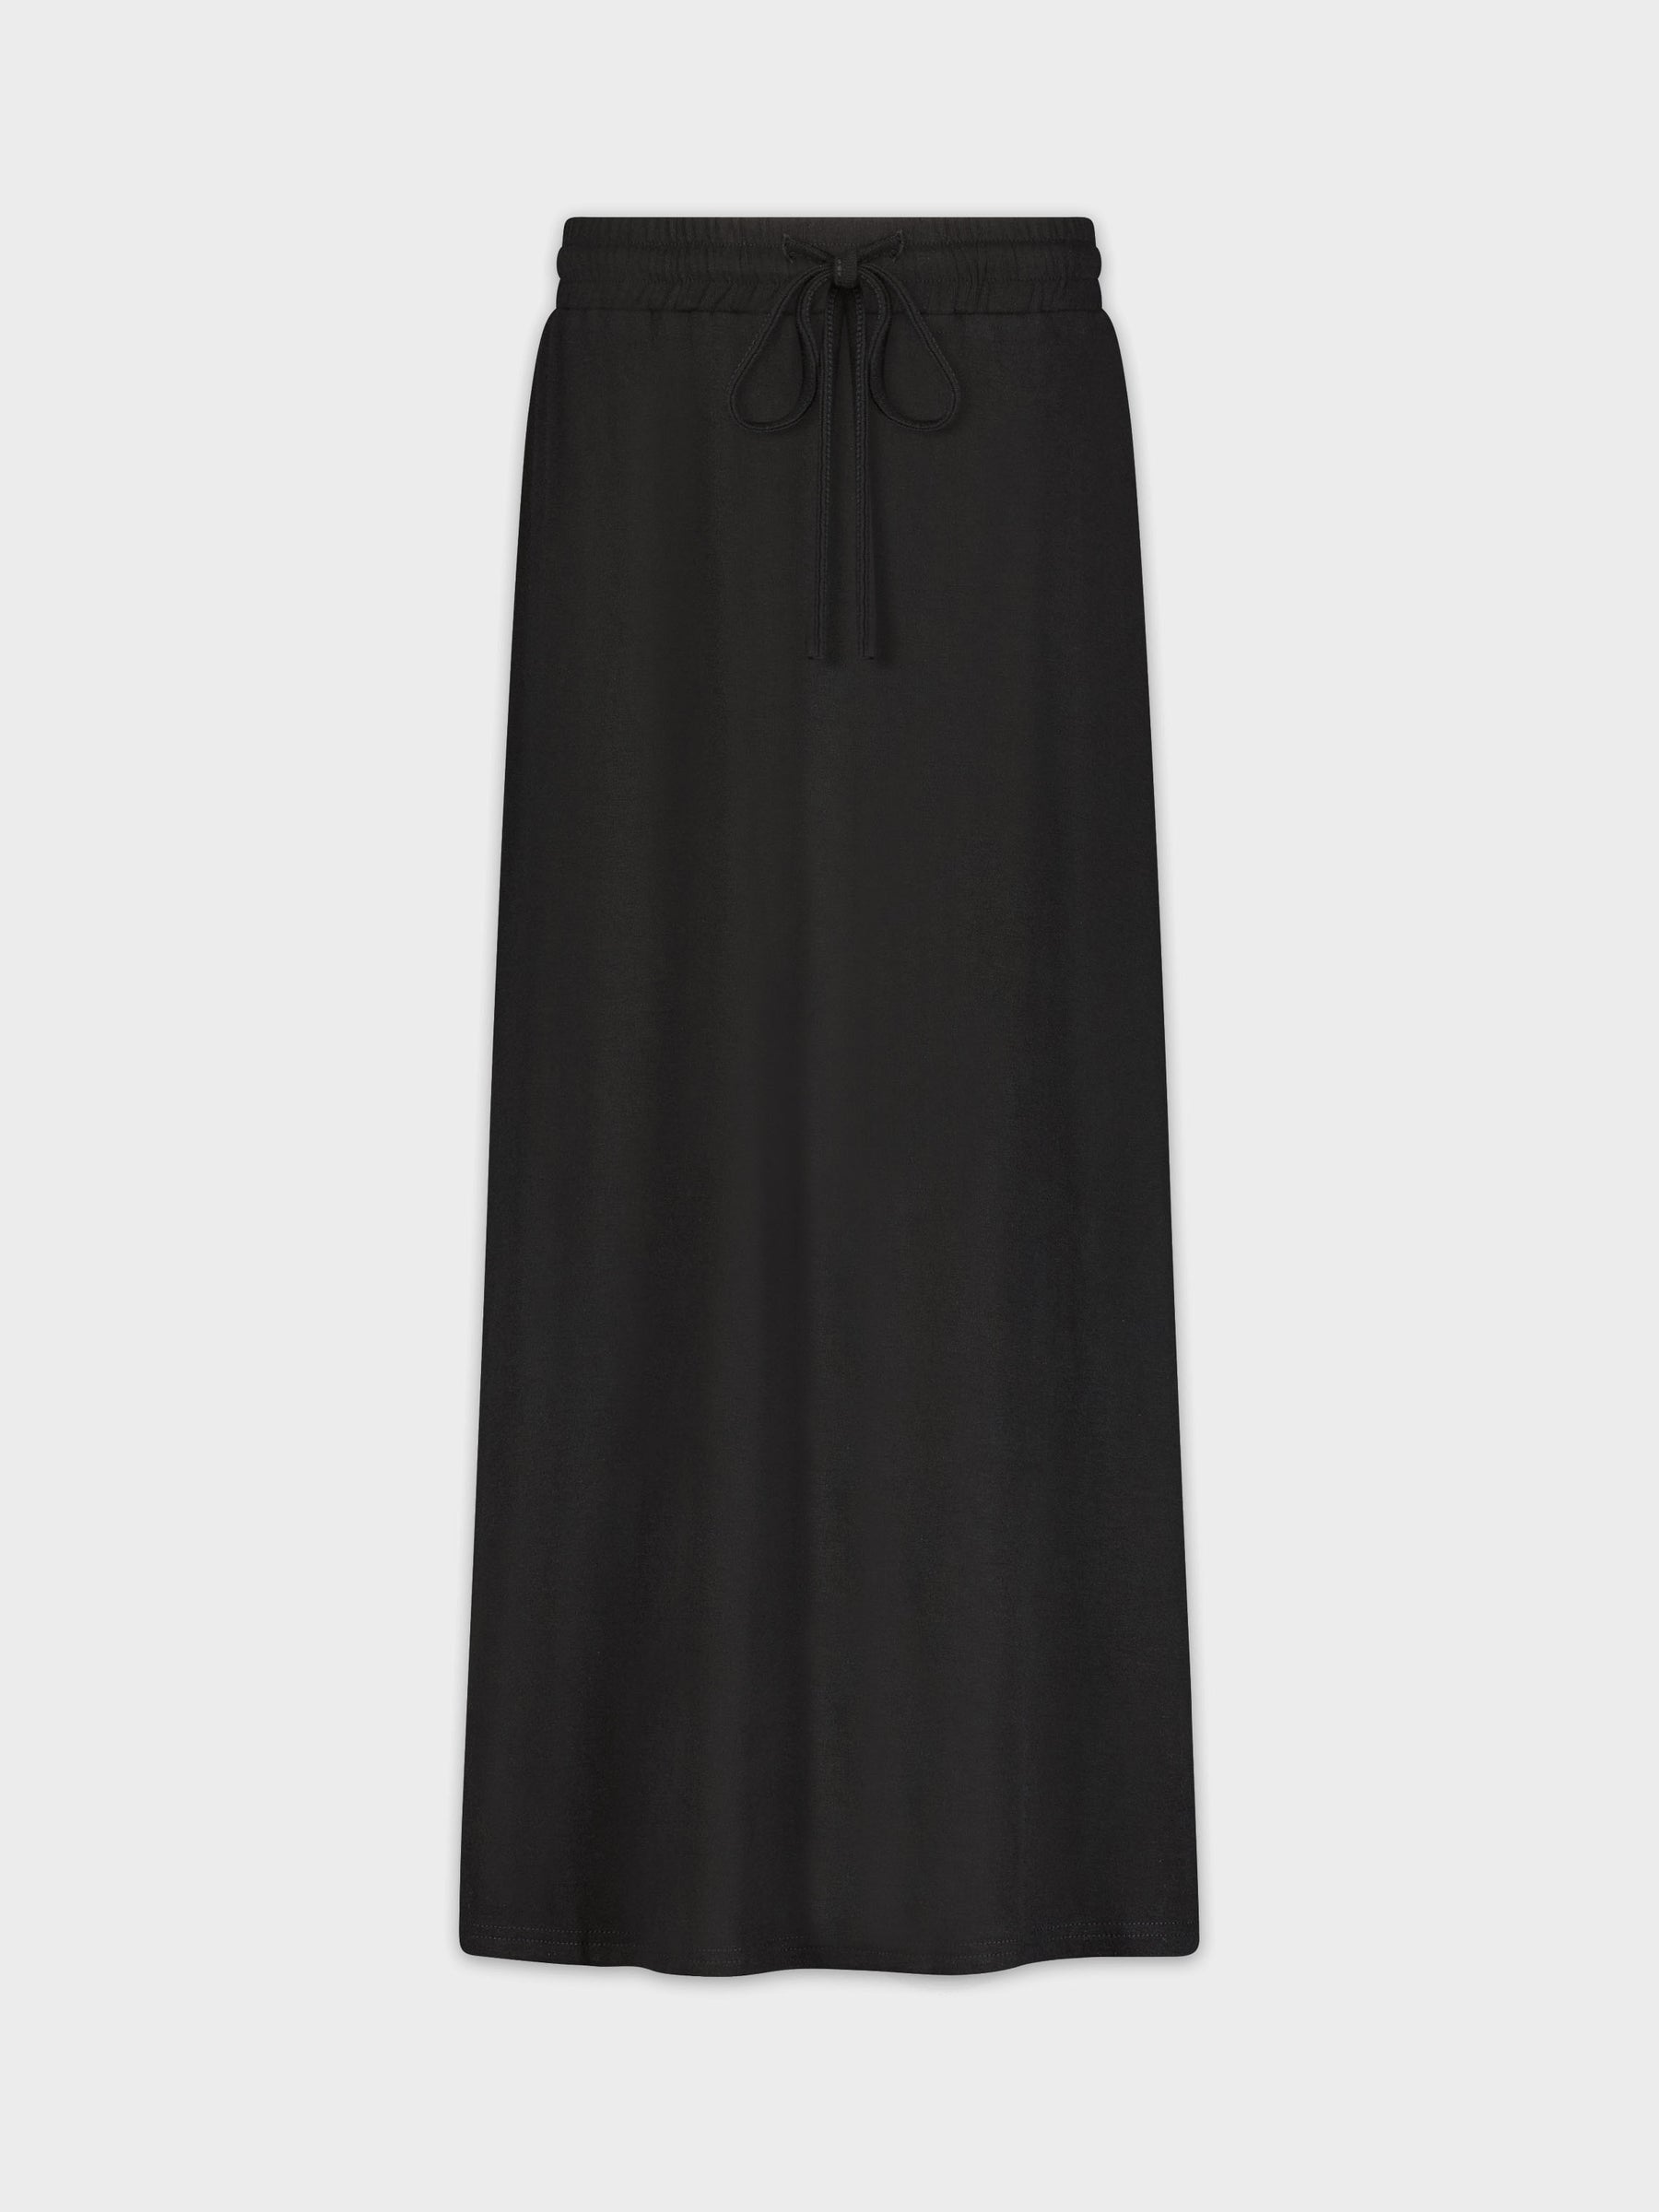 Heathered Drawstring Skirt-Black